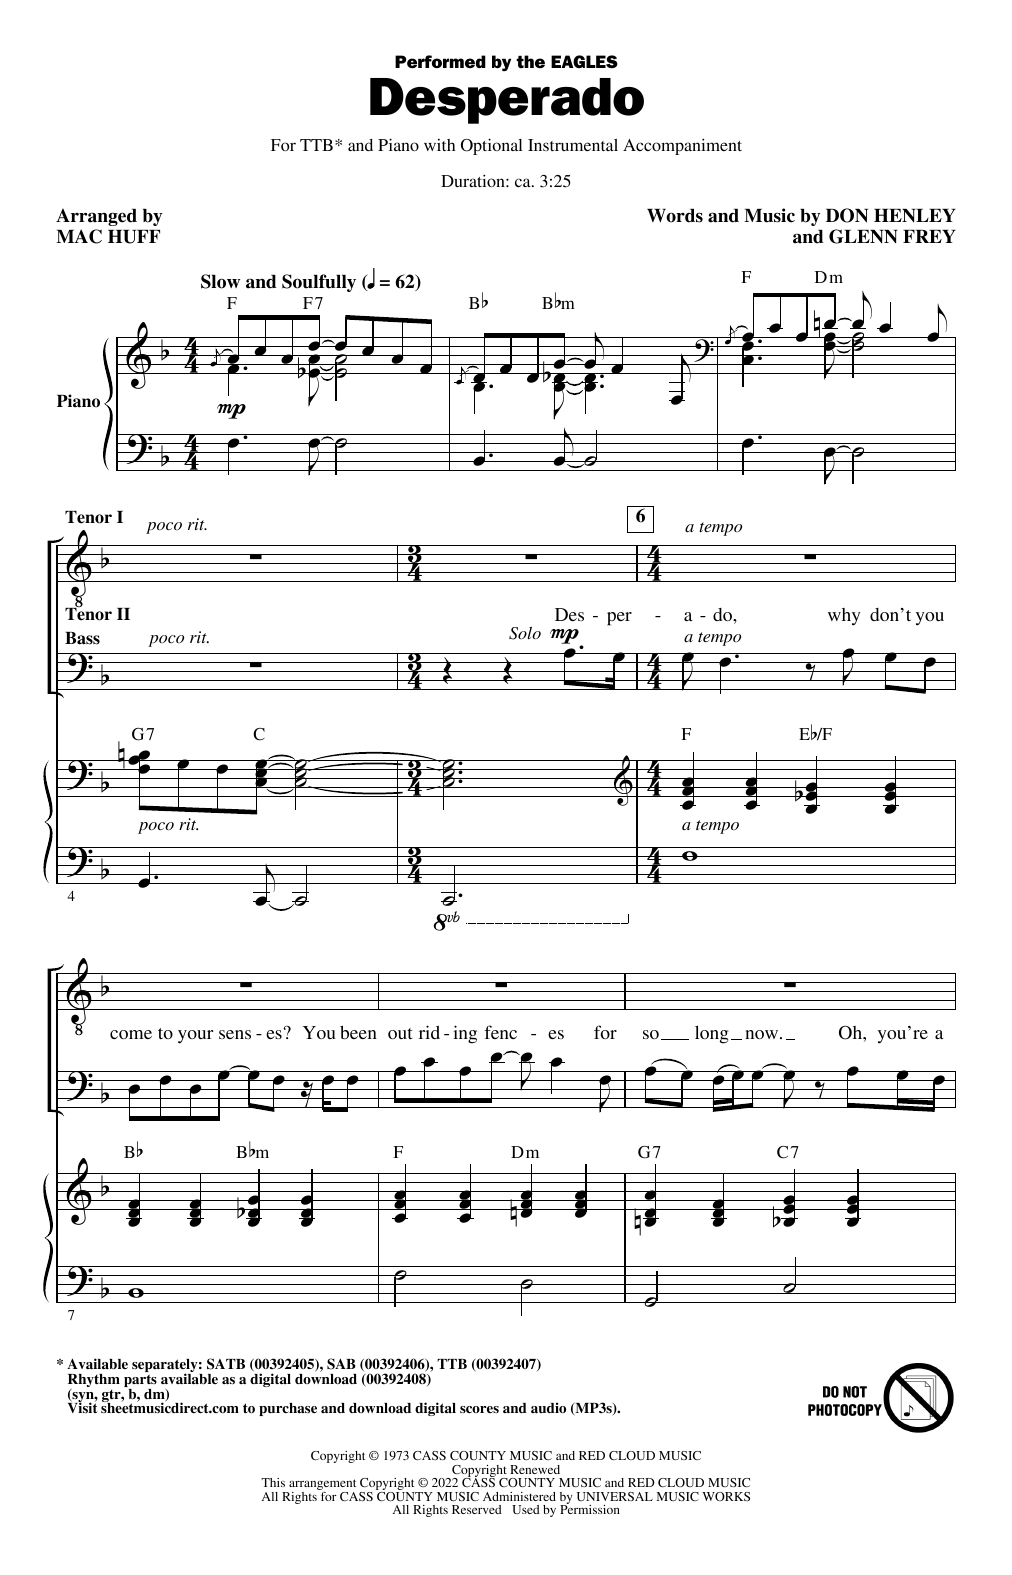 Eagles Desperado (arr. Mac Huff) sheet music notes and chords arranged for TTBB Choir